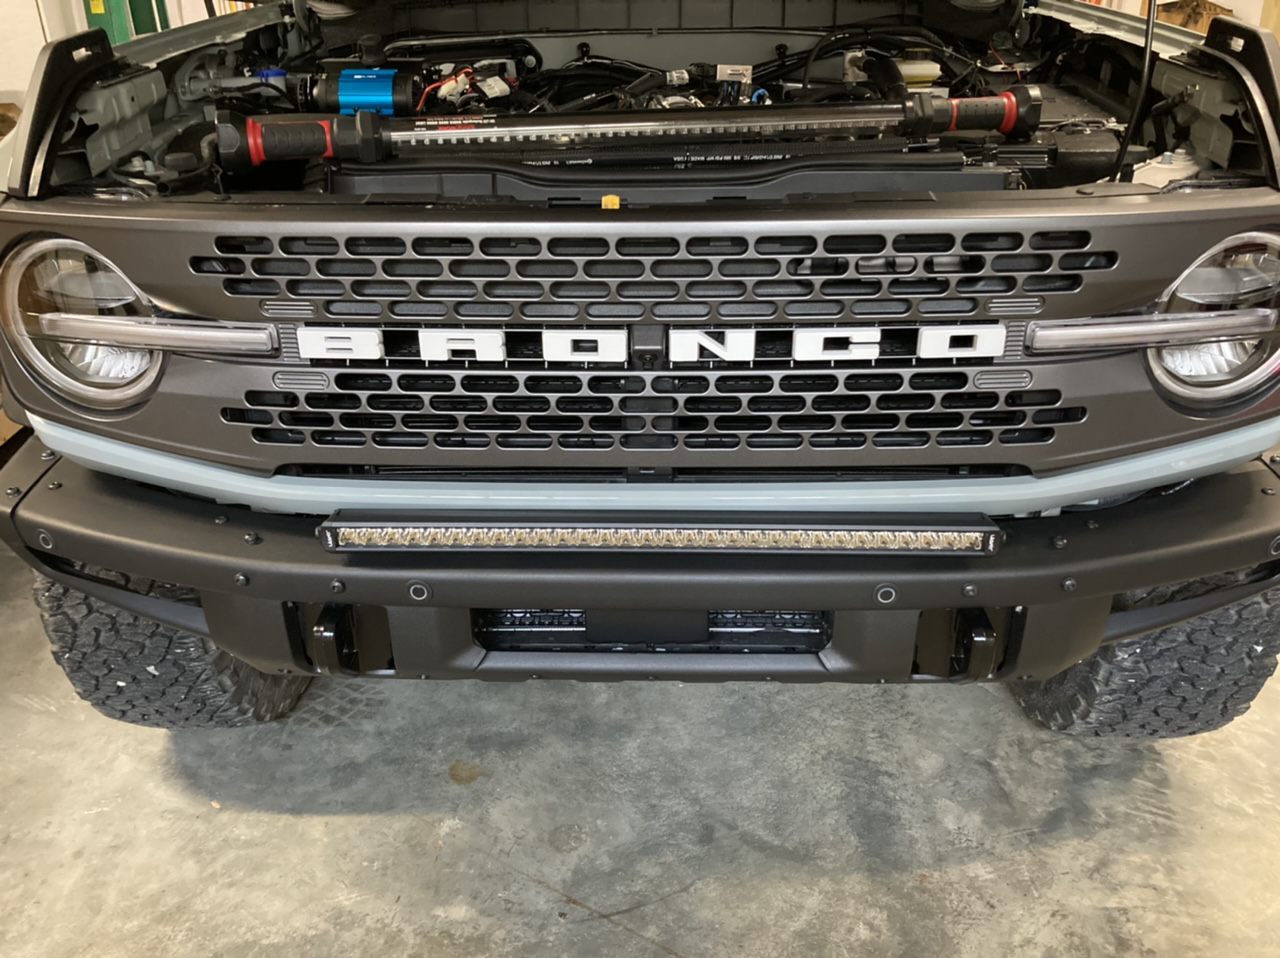 Ford Bronco Lasfit Light Bar Install on Modular Bumper 5A707711-911C-4B15-80AA-B01F3DE631A9